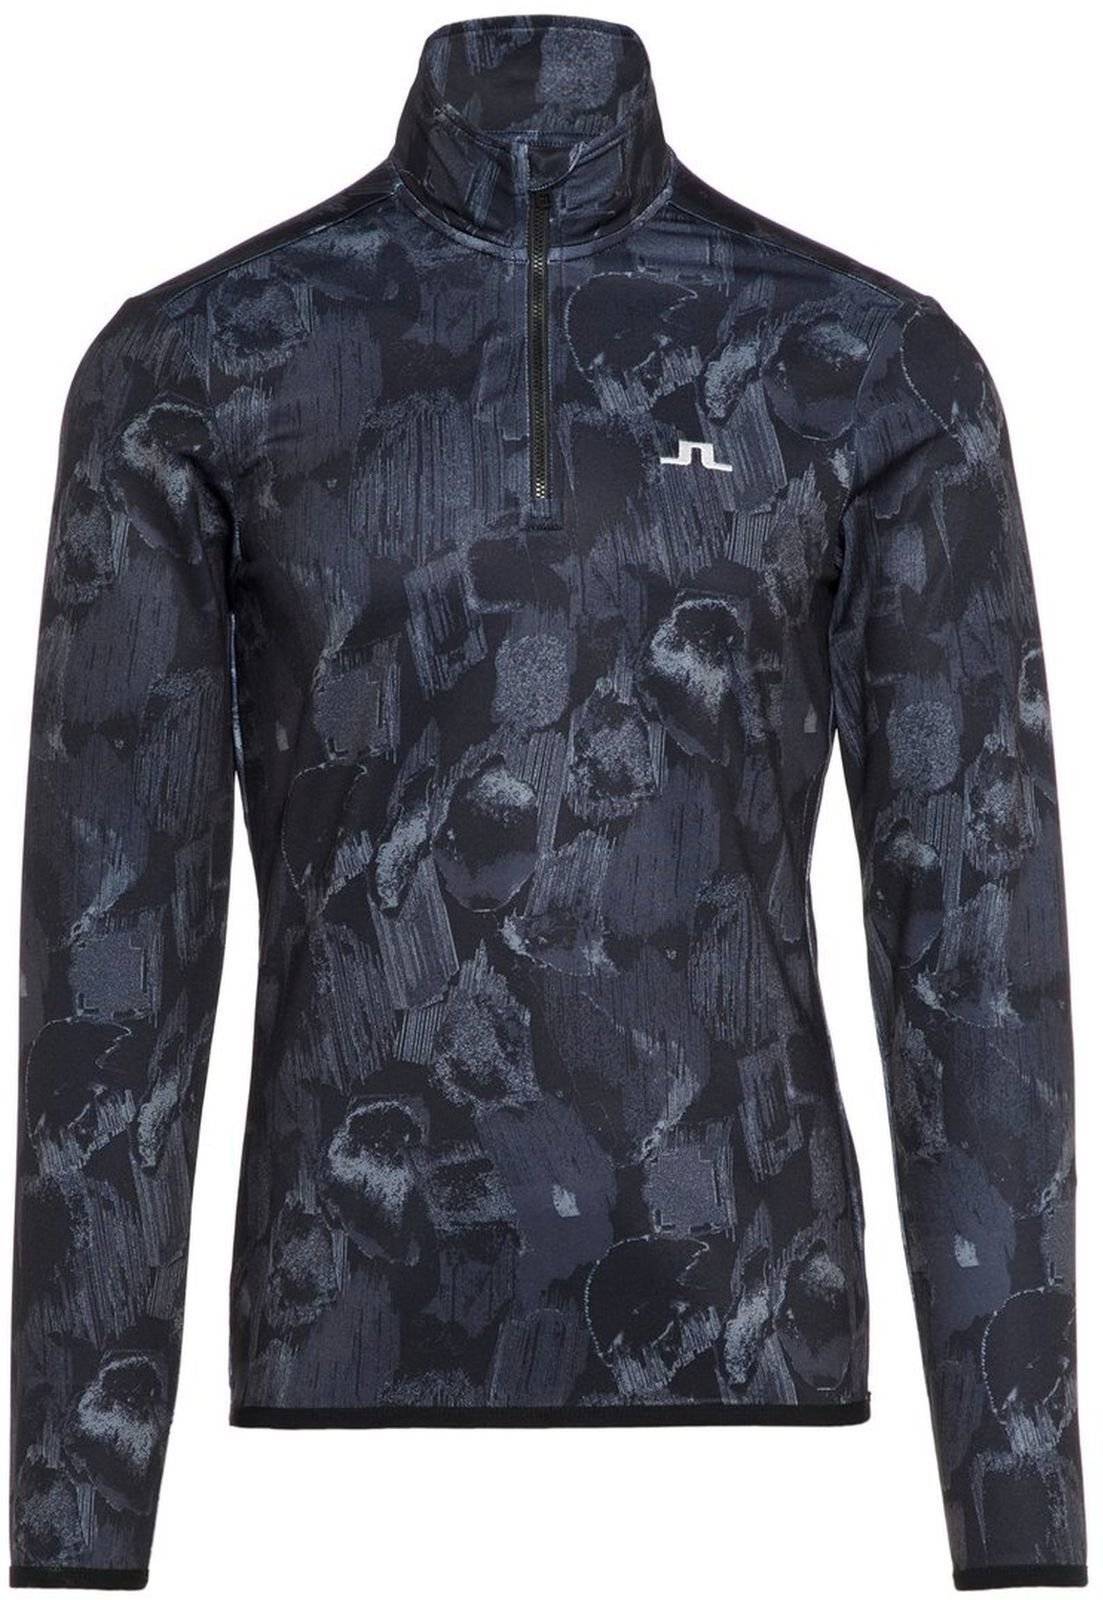 T-shirt/casaco com capuz para esqui J.Lindeberg Kimball Printed Mid Jersey Black Sports Camo M